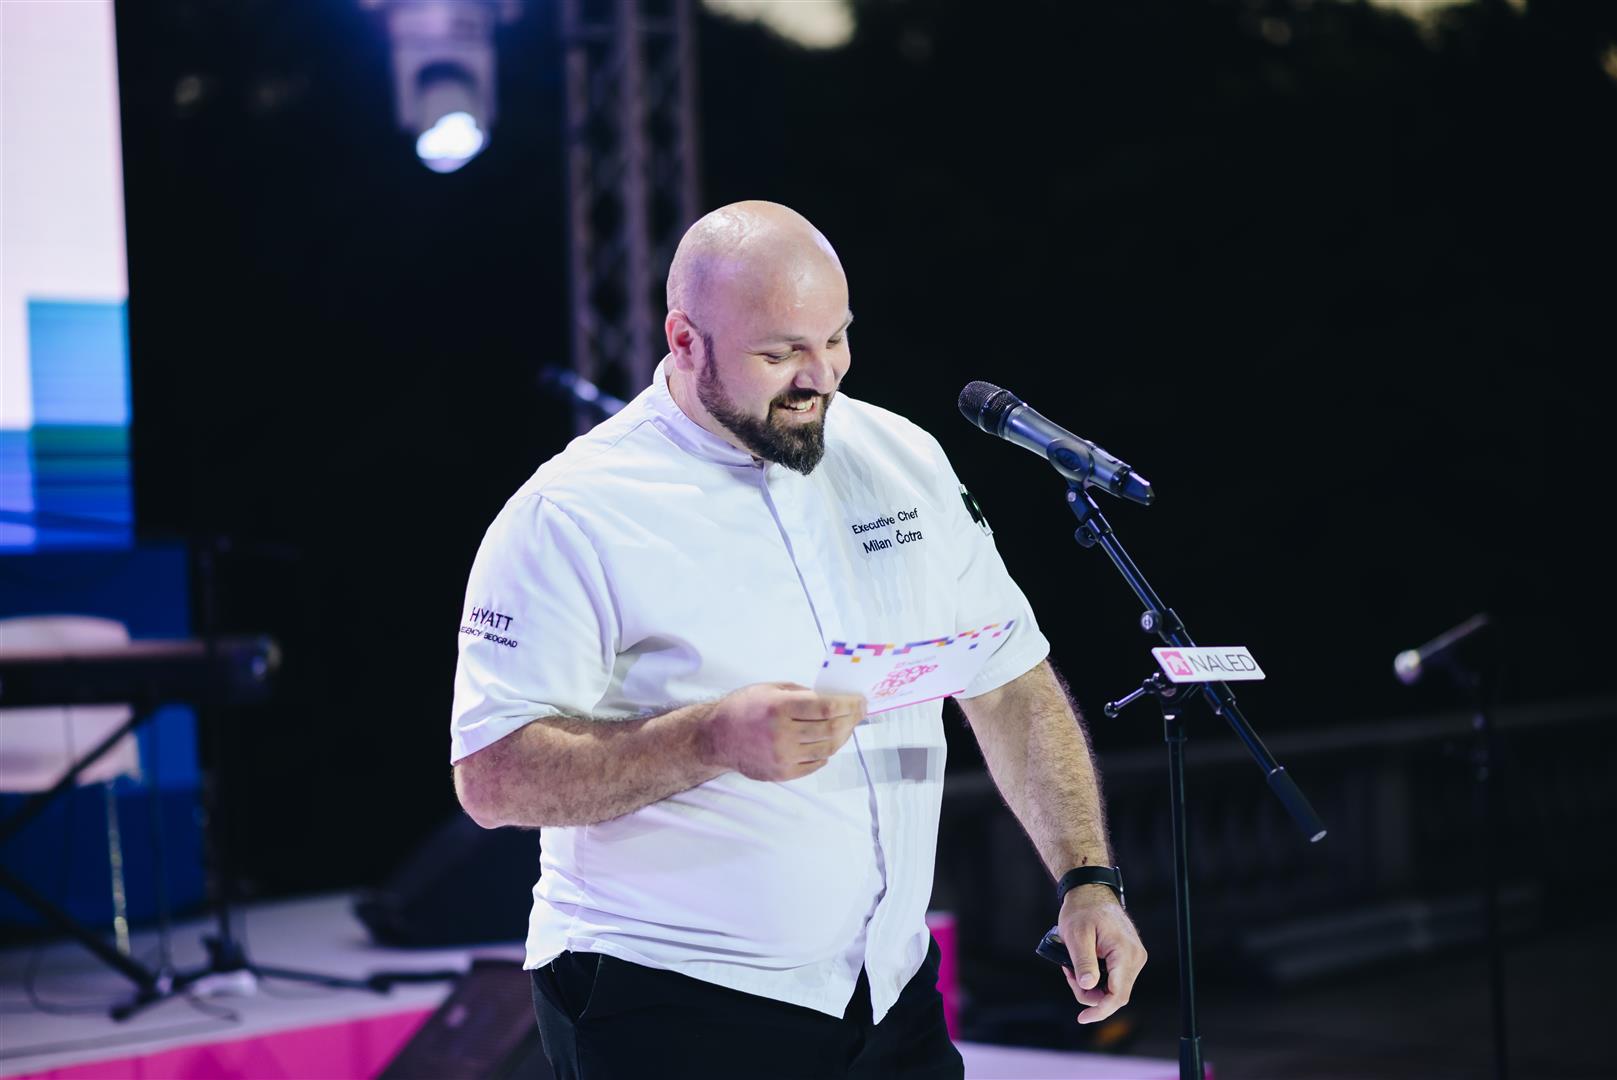 Chef Milan Čotra